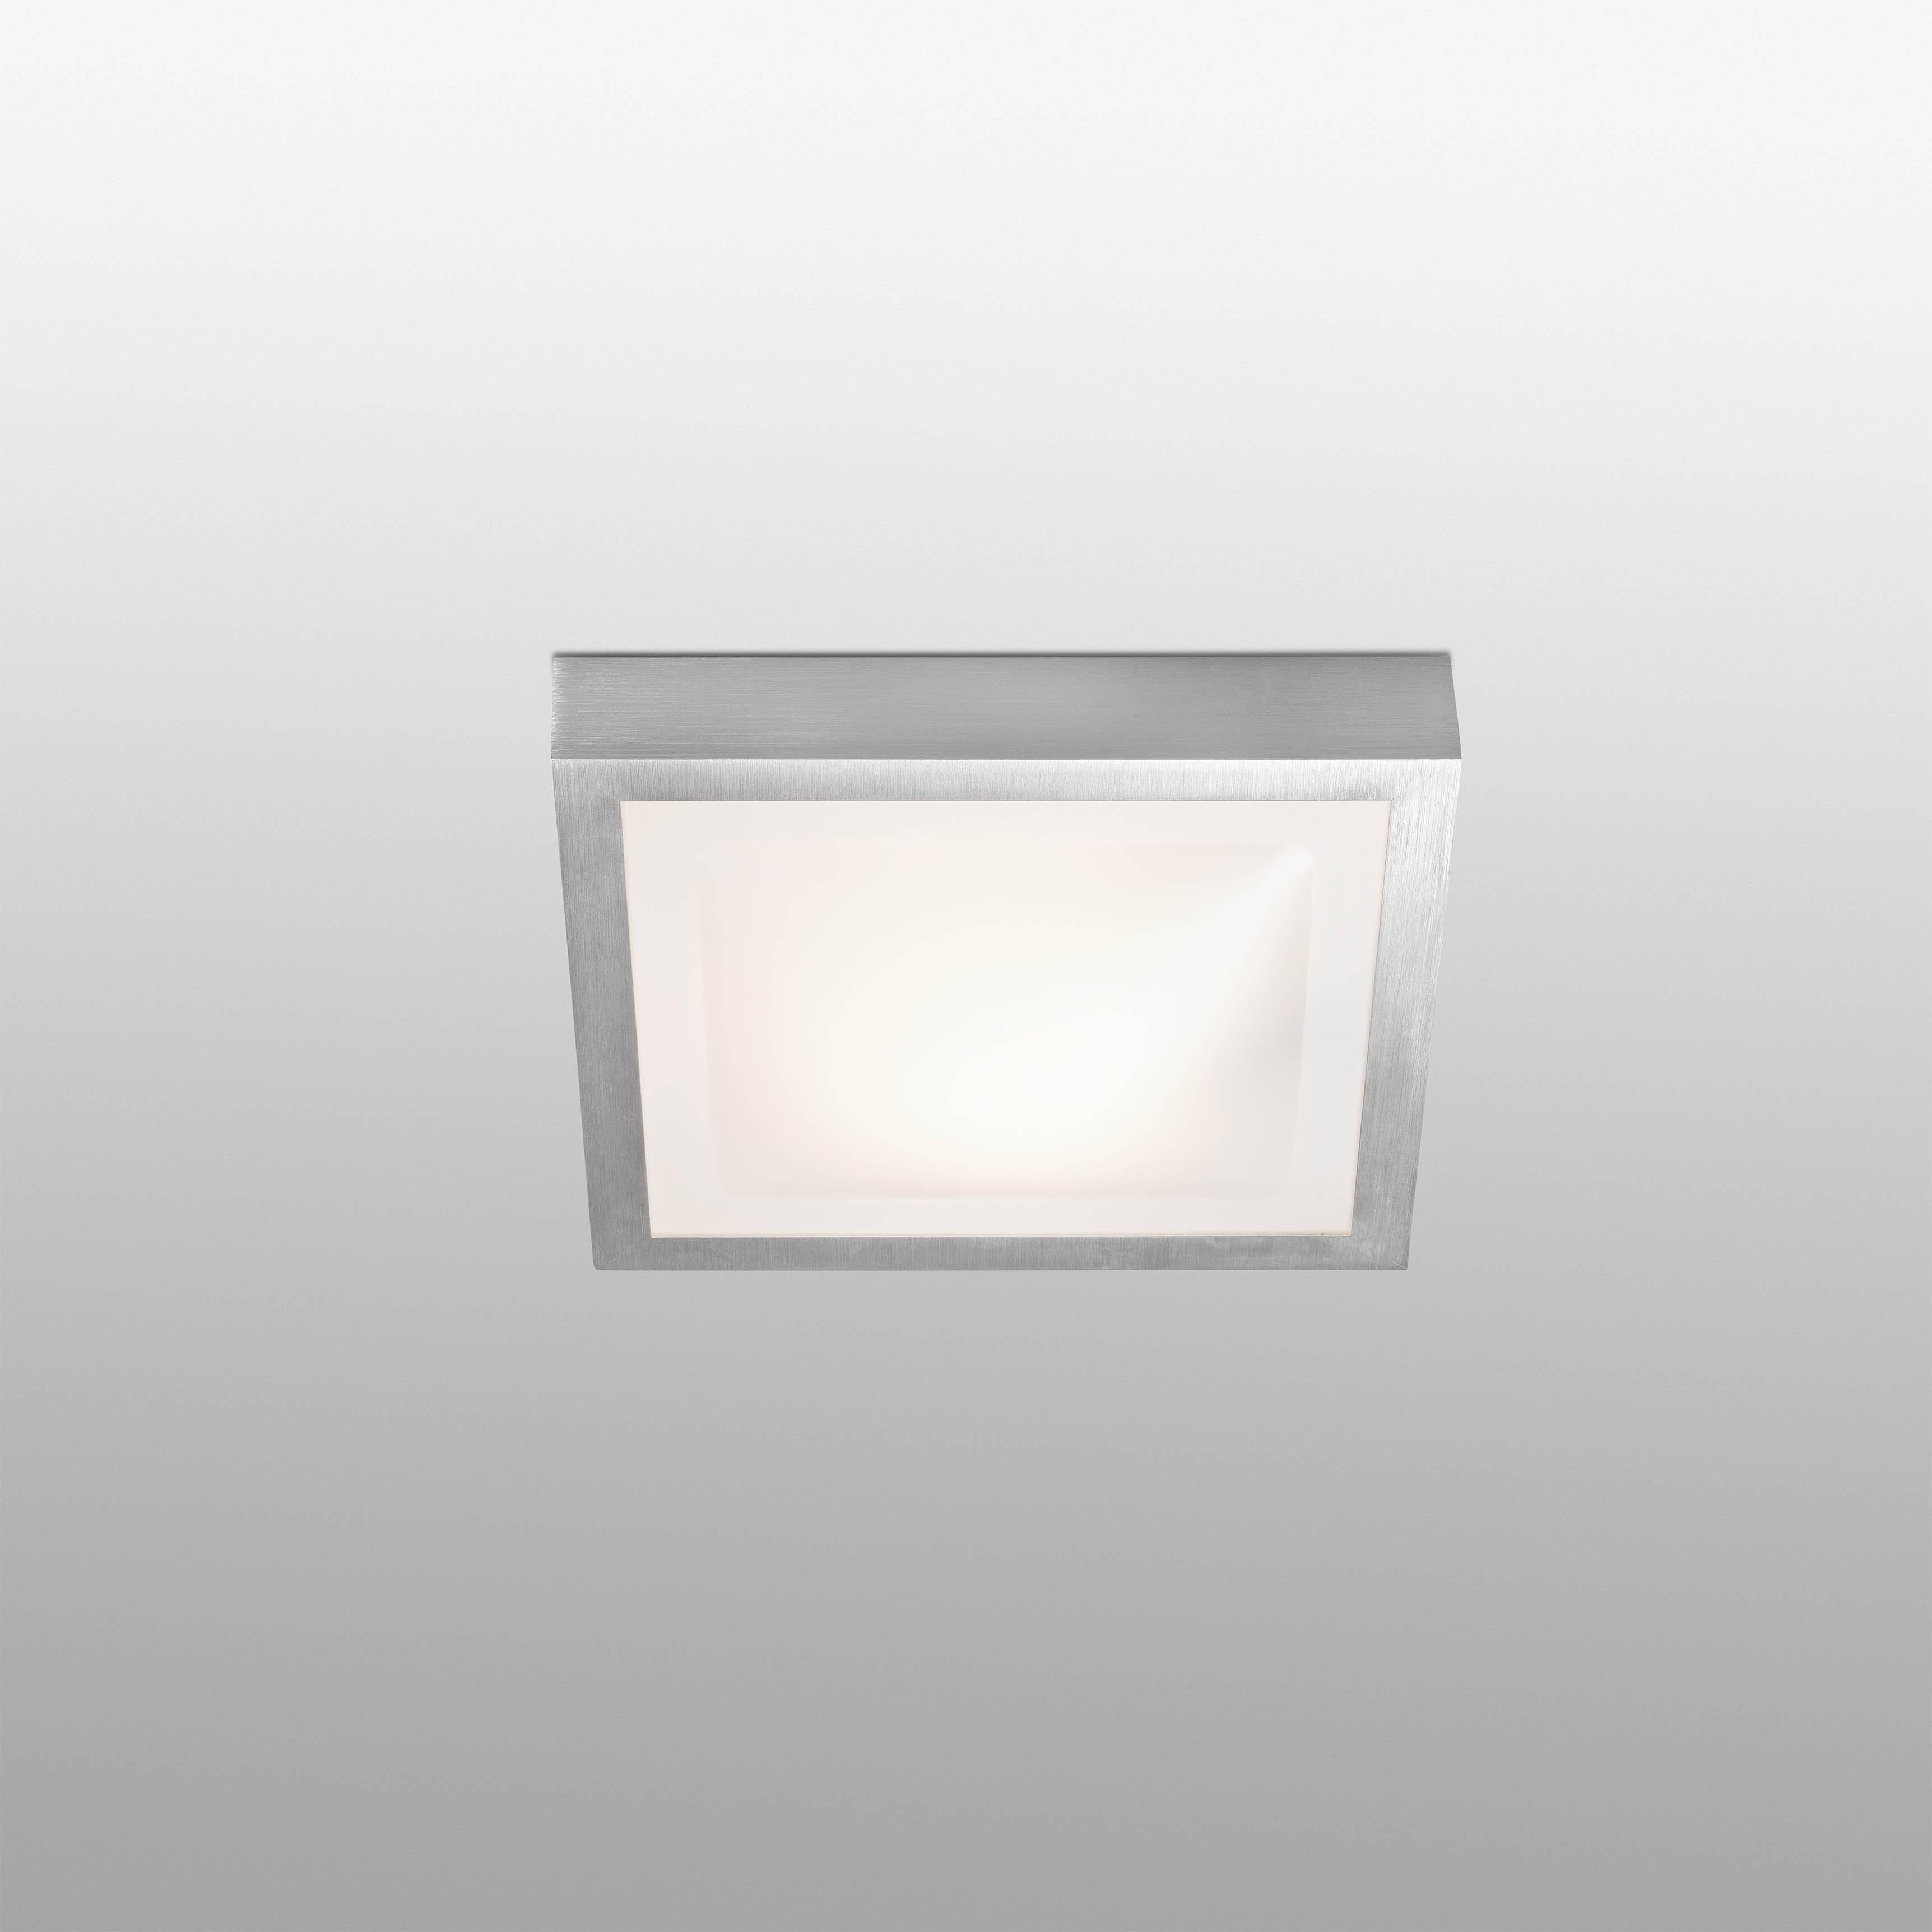 Tola 1 Light Small Square Bathroom Flush Ceiling Light Aluminium White IP44 E27 - image 1